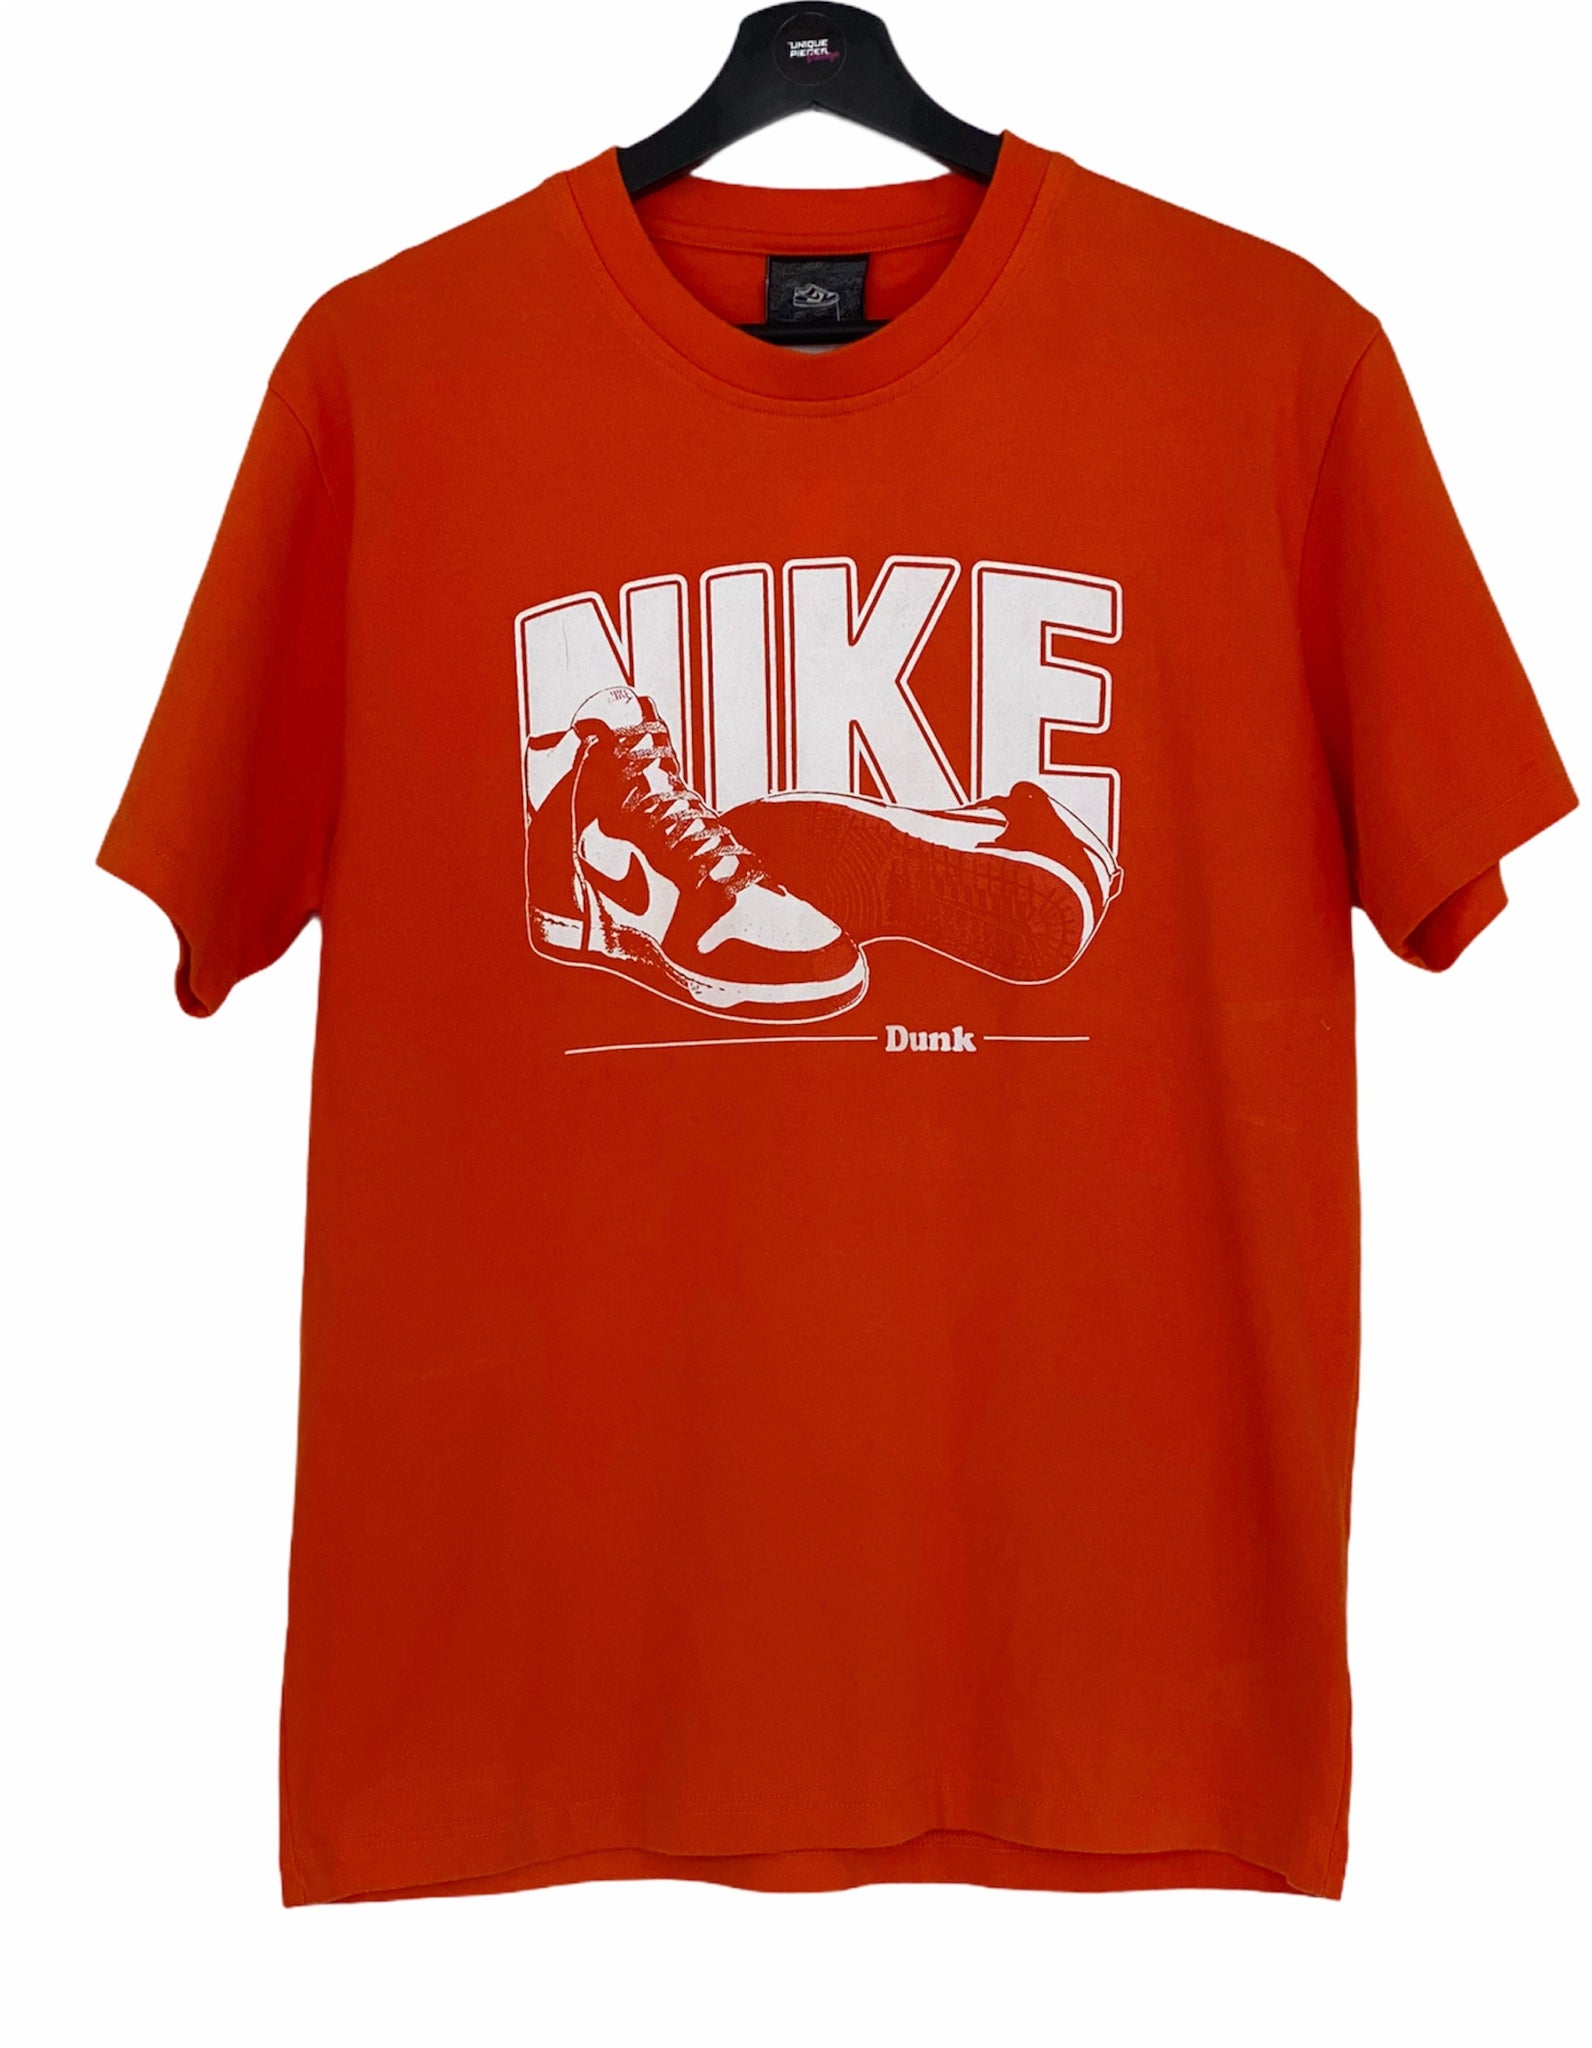 Nike Dunk SB Back to School  T -Shirt Orange Medium freeshipping - Unique Pieces Vintage